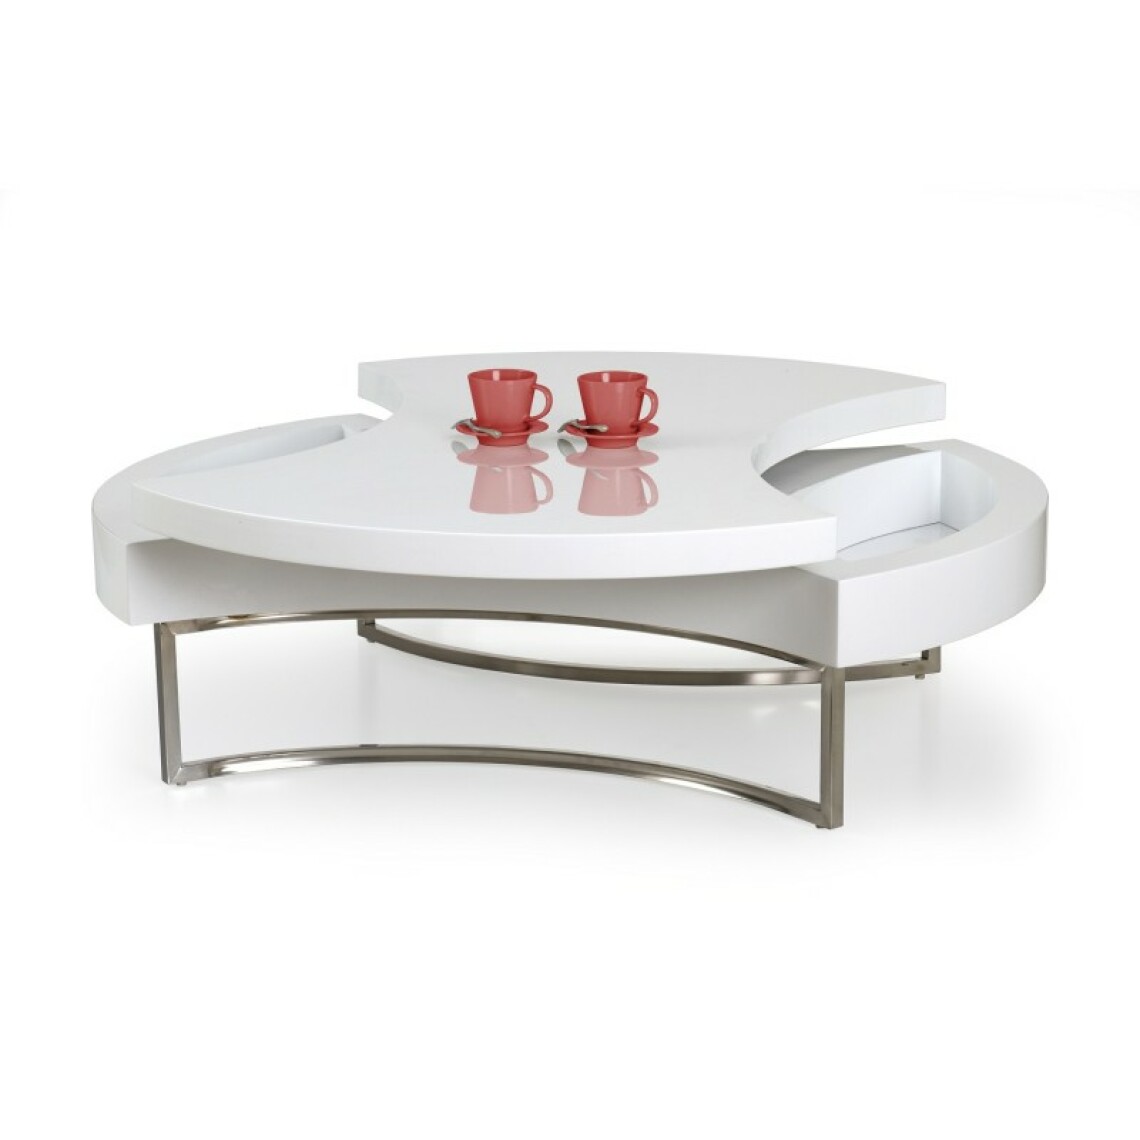 Carellia - Table basse design 115 cm x 80 cm x 38 cm - Blanc - Tables basses